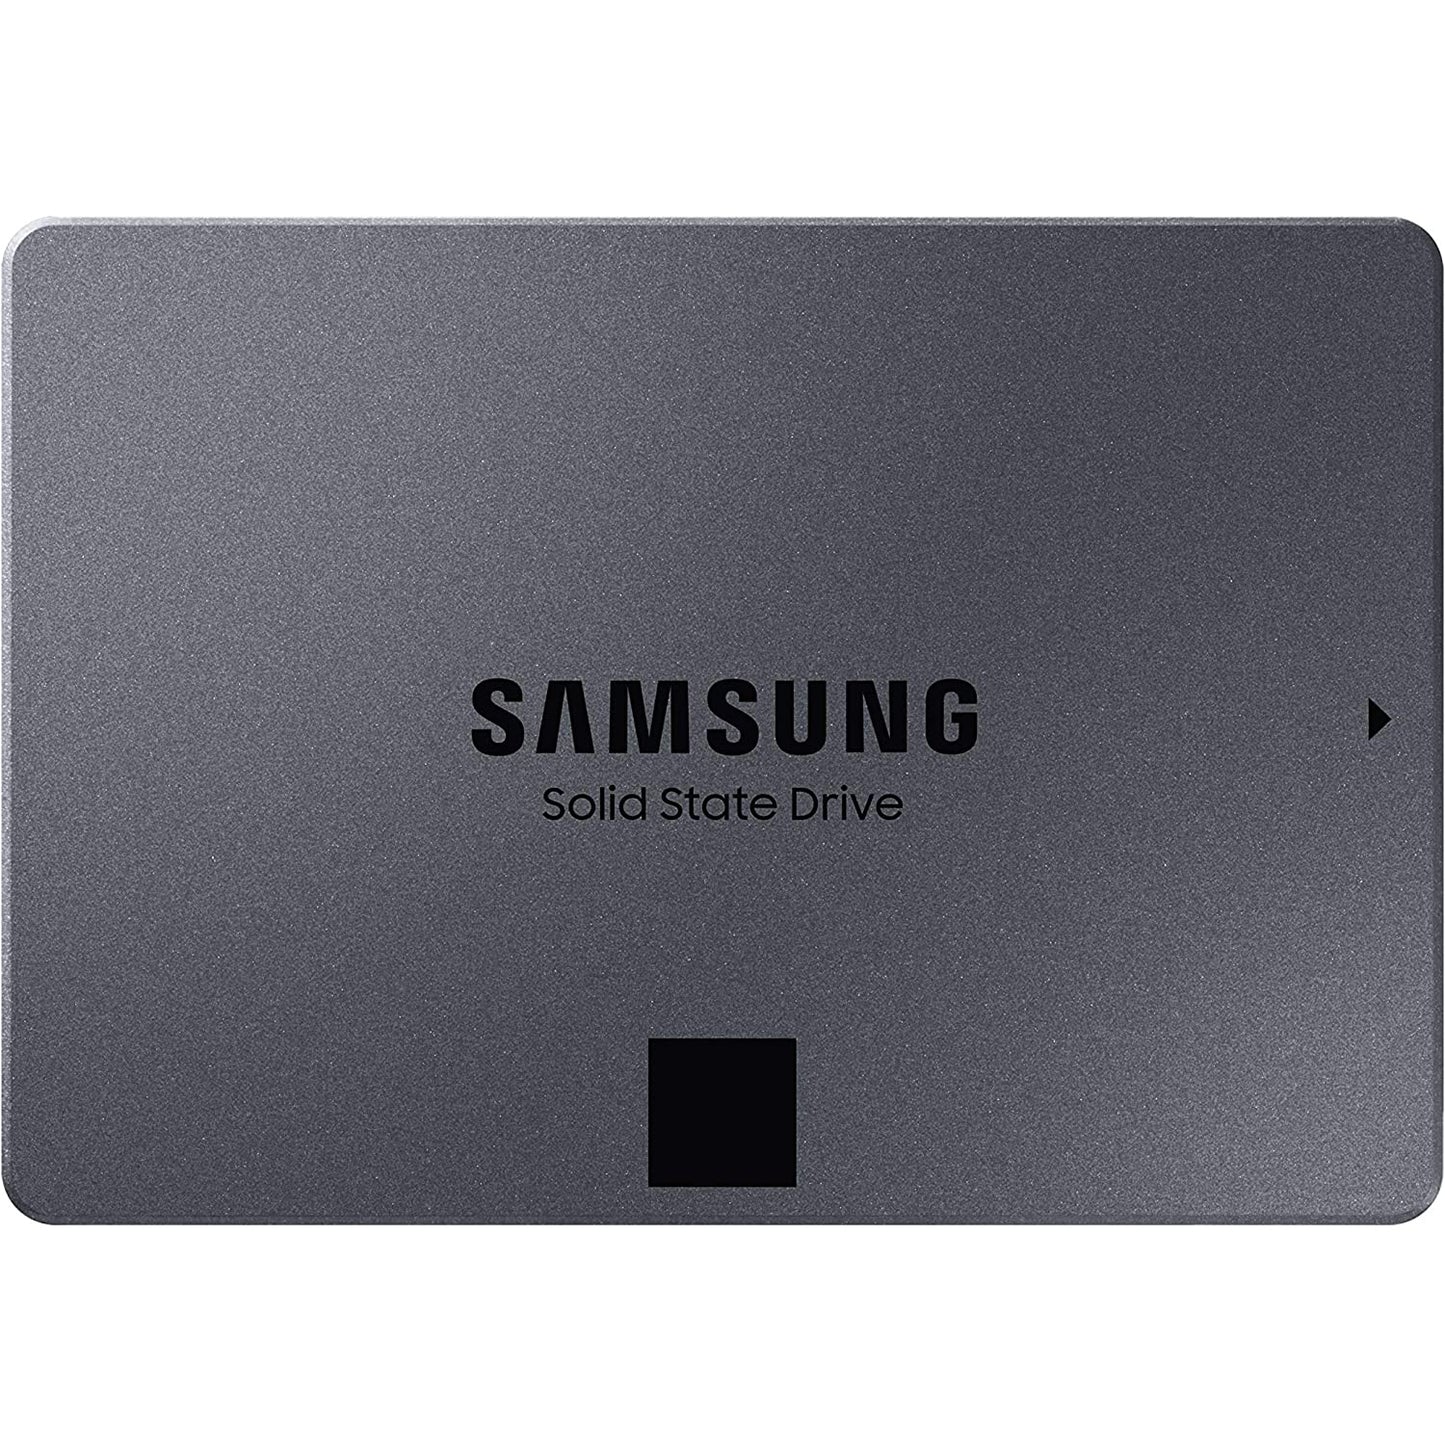 Samsung QVO 870 1TB SSD 2.5" SATA III Solid State Drive, 560 MB/s Read 530 MB/s Write